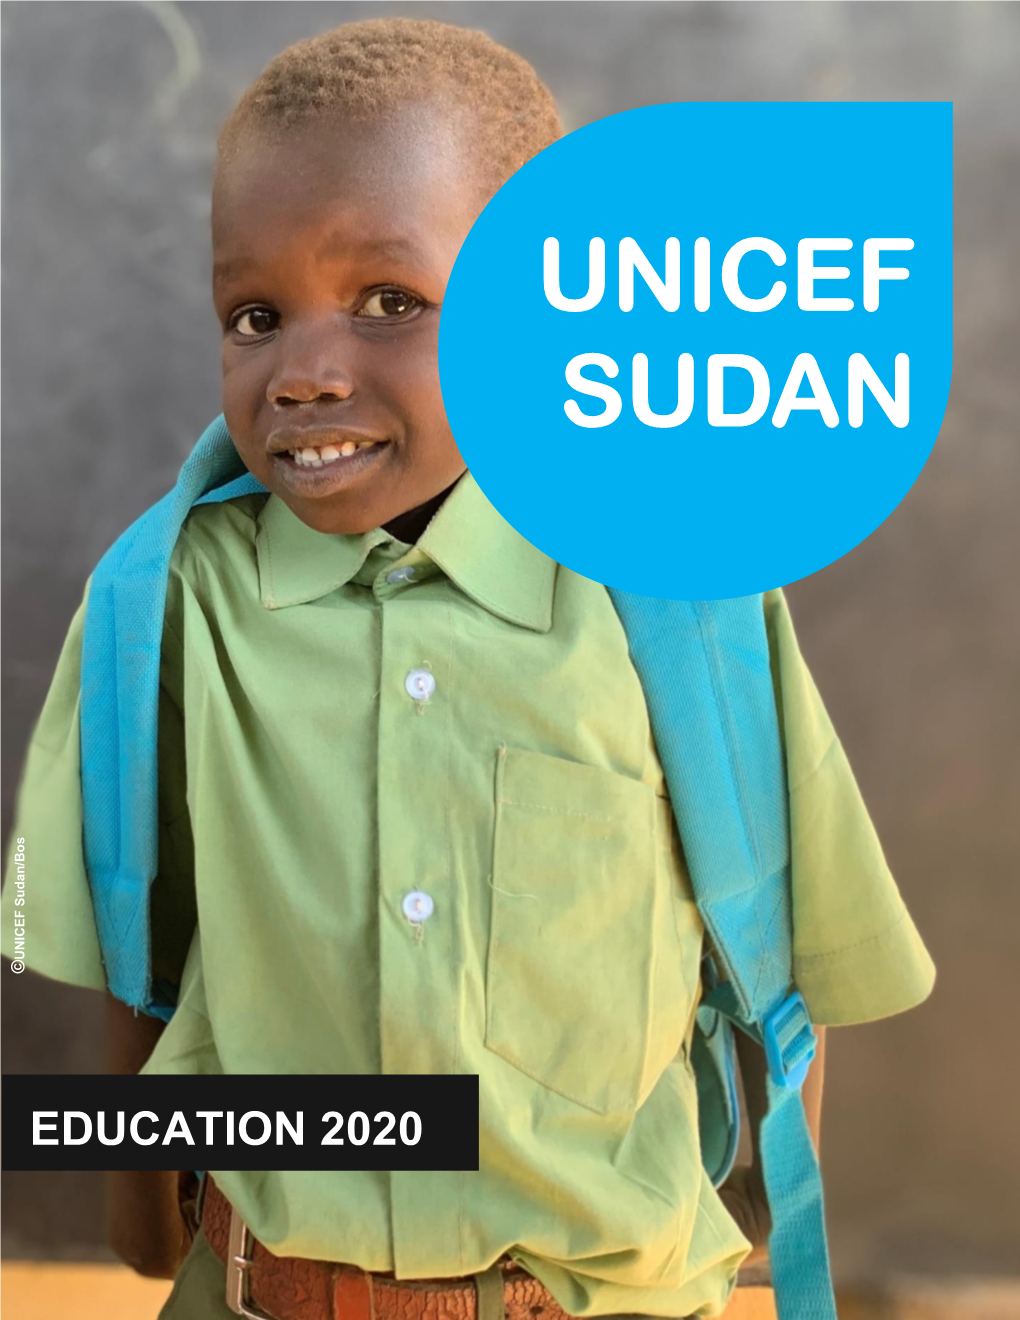 Unicef Sudan